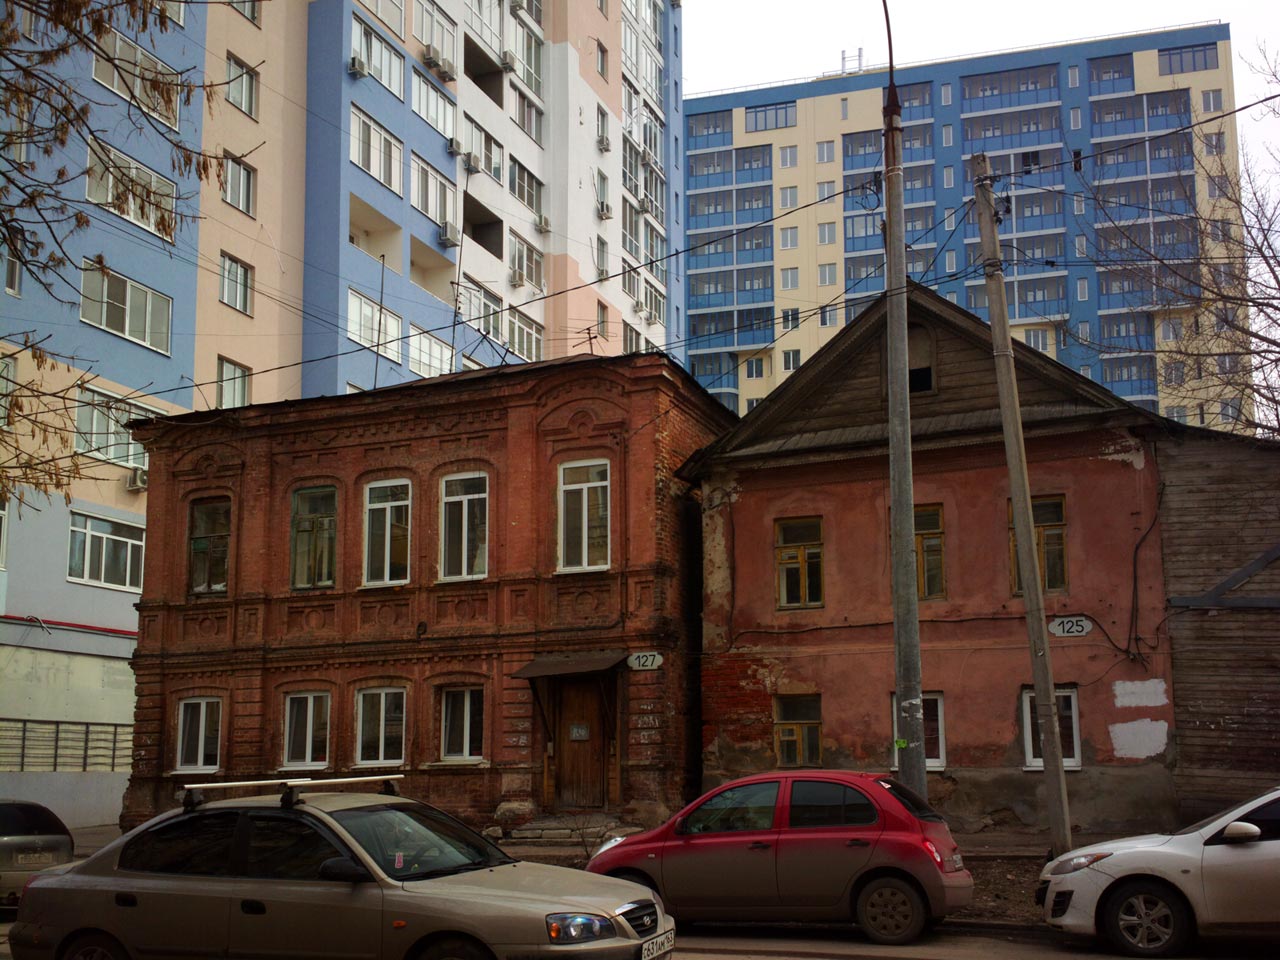 Samara, Улица Алексея Толстого, 127; Улица Алексея Толстого, 125